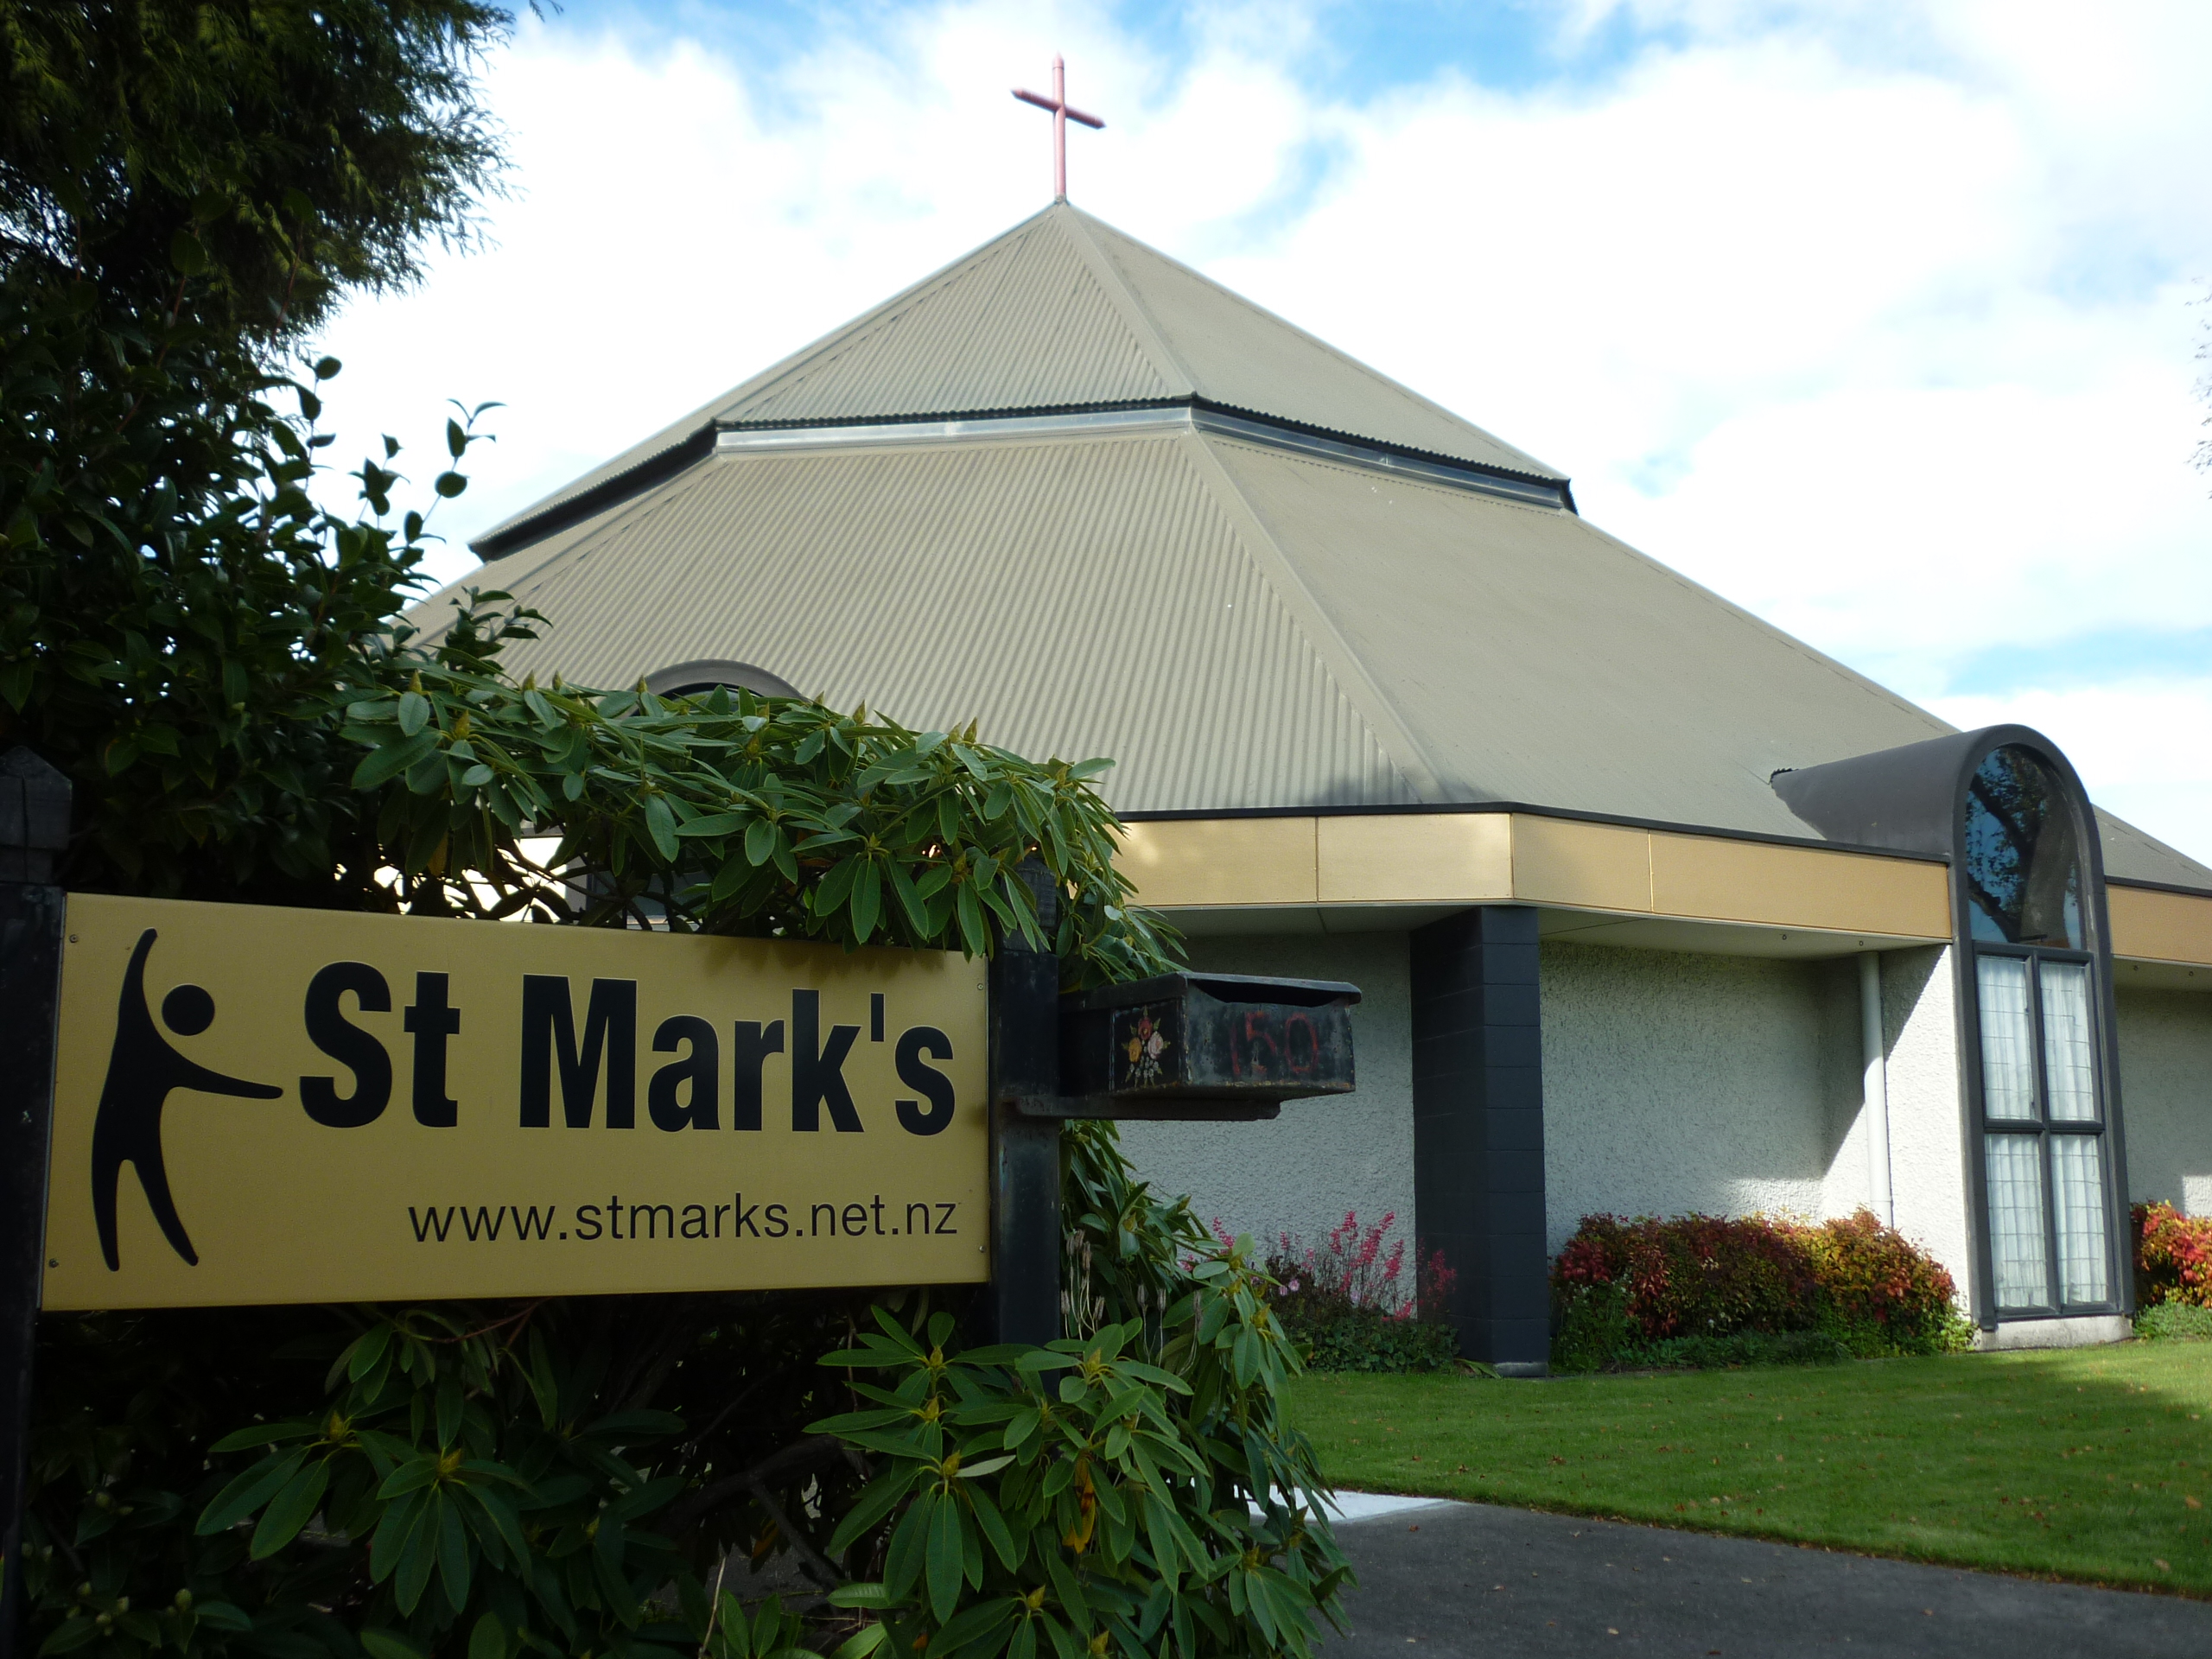 St Marks exterior